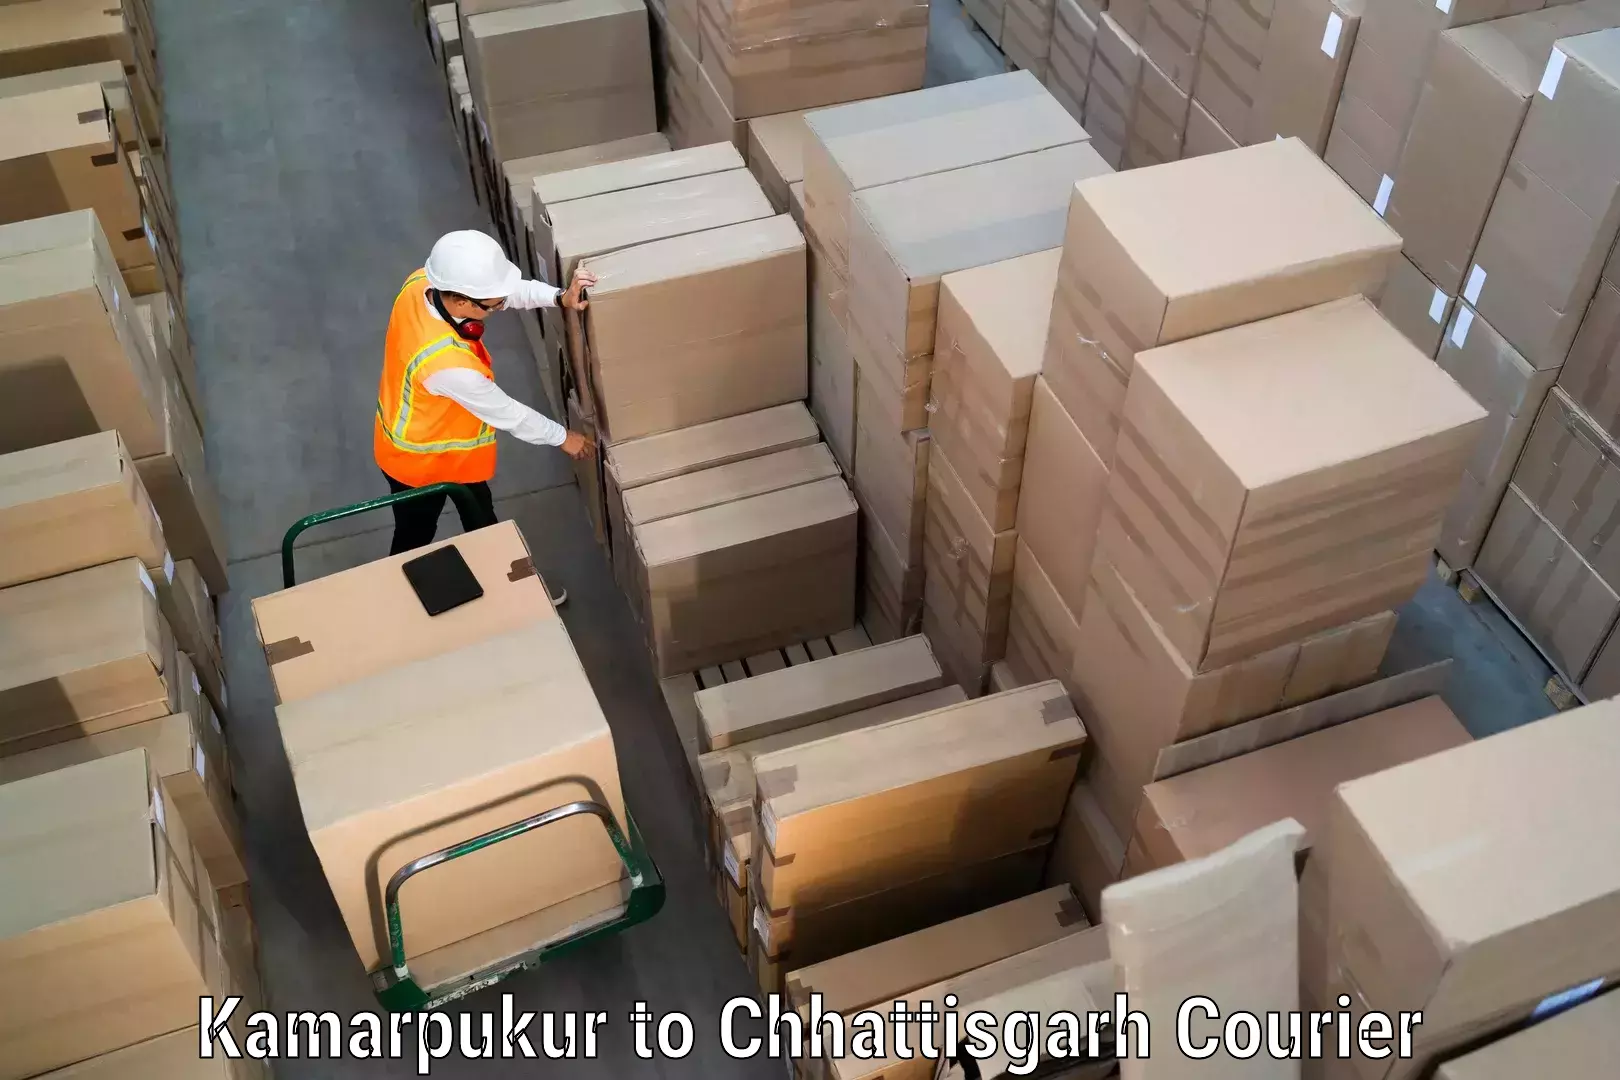 Courier service booking Kamarpukur to Chhattisgarh